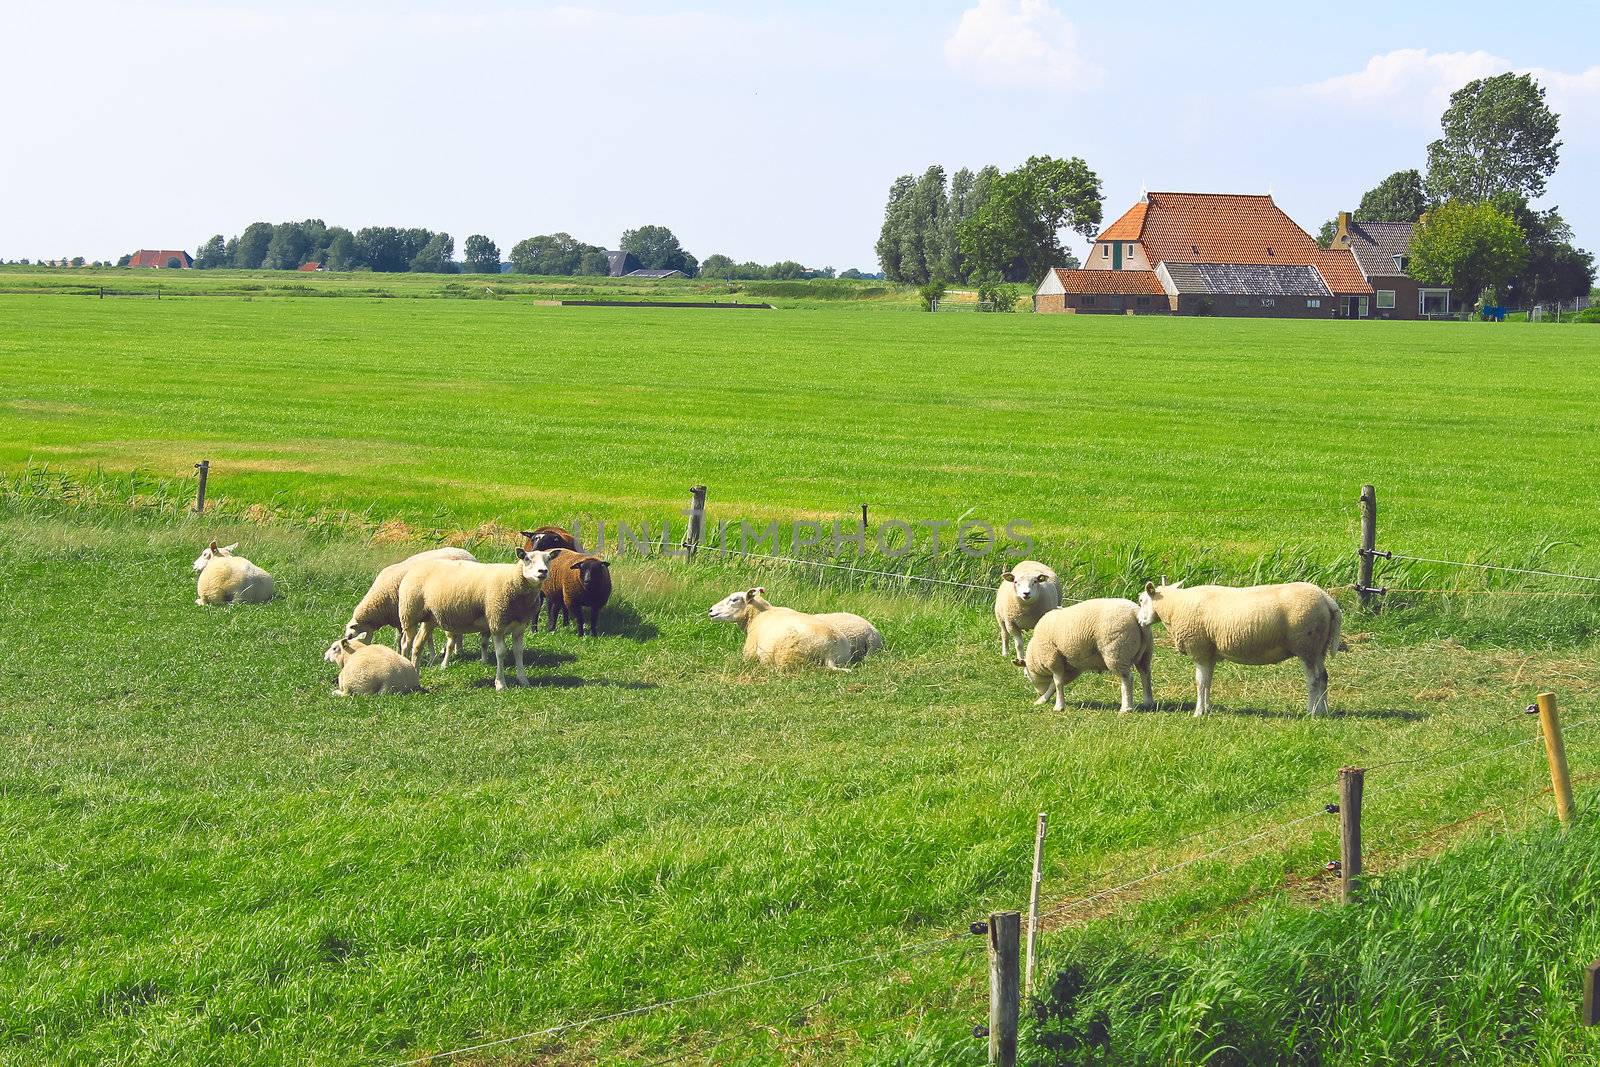 Sheep graze in a meadow near the Dutch farm by NickNick